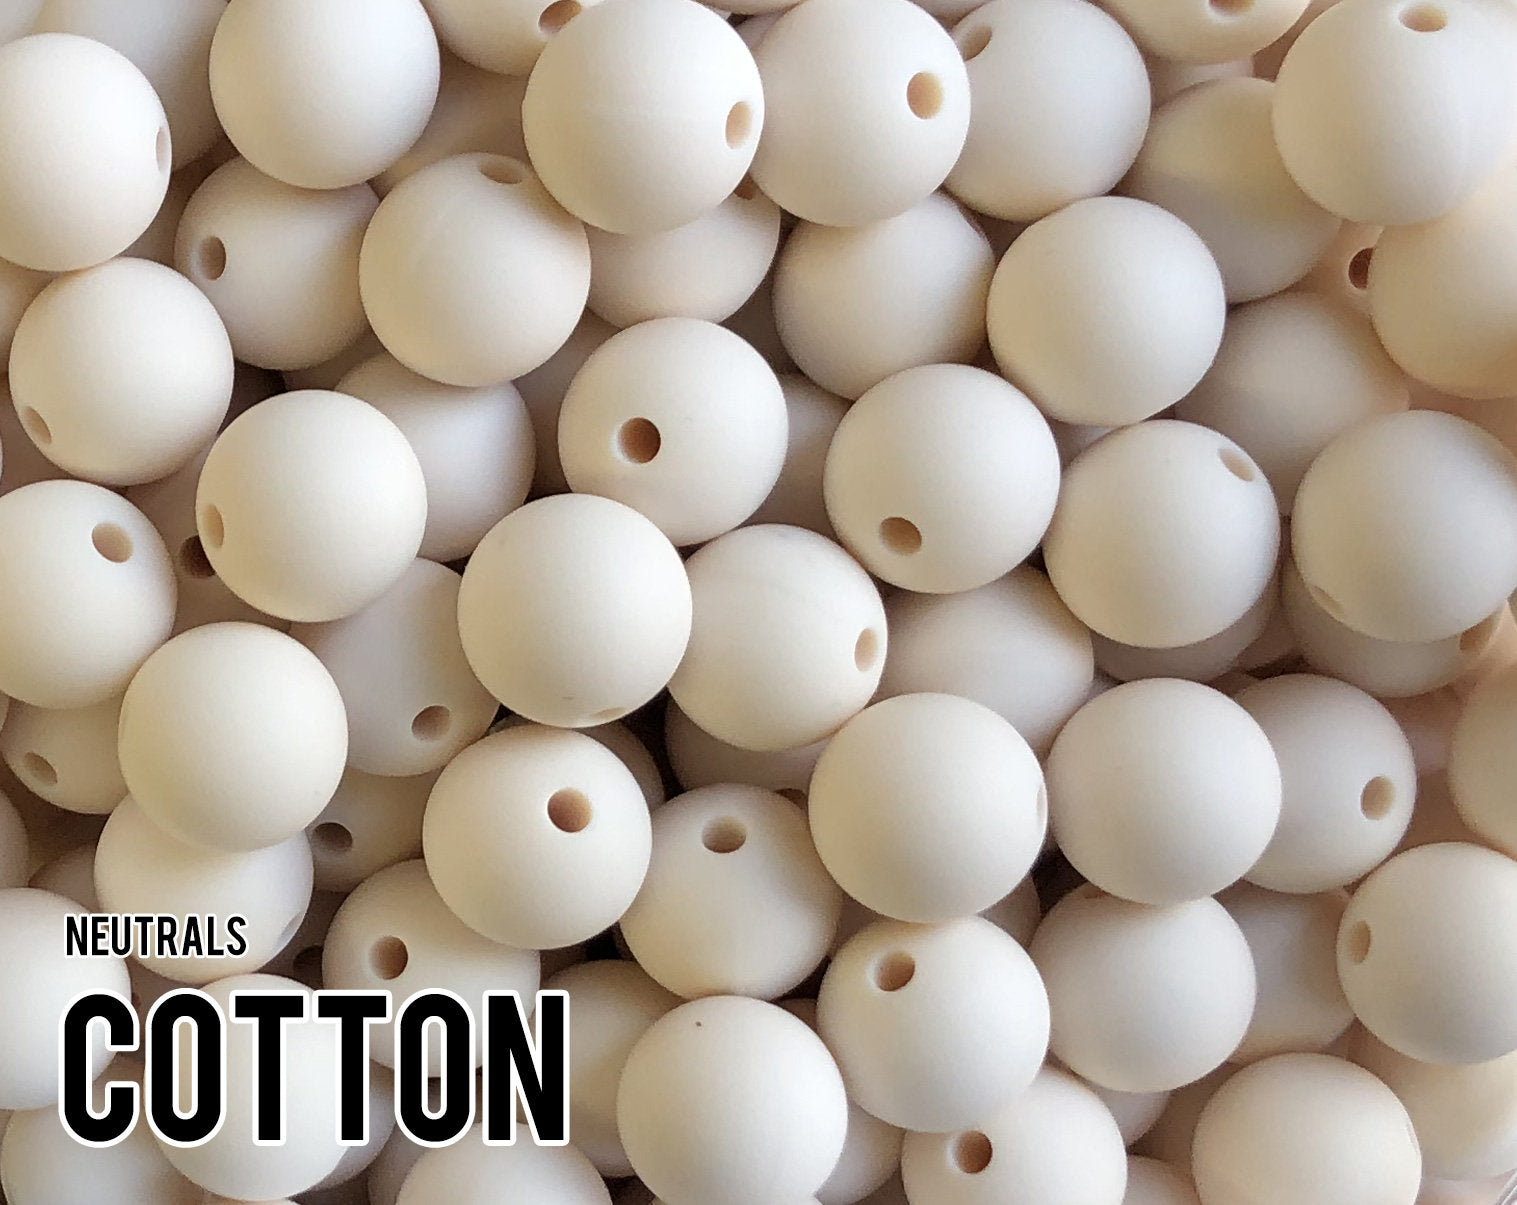 Silicone Beads, 12 mm Cotton Silicone Beads 5-1,000 (aka off white, ivory, white, neutral) Bulk Silicone Beads Wholesale